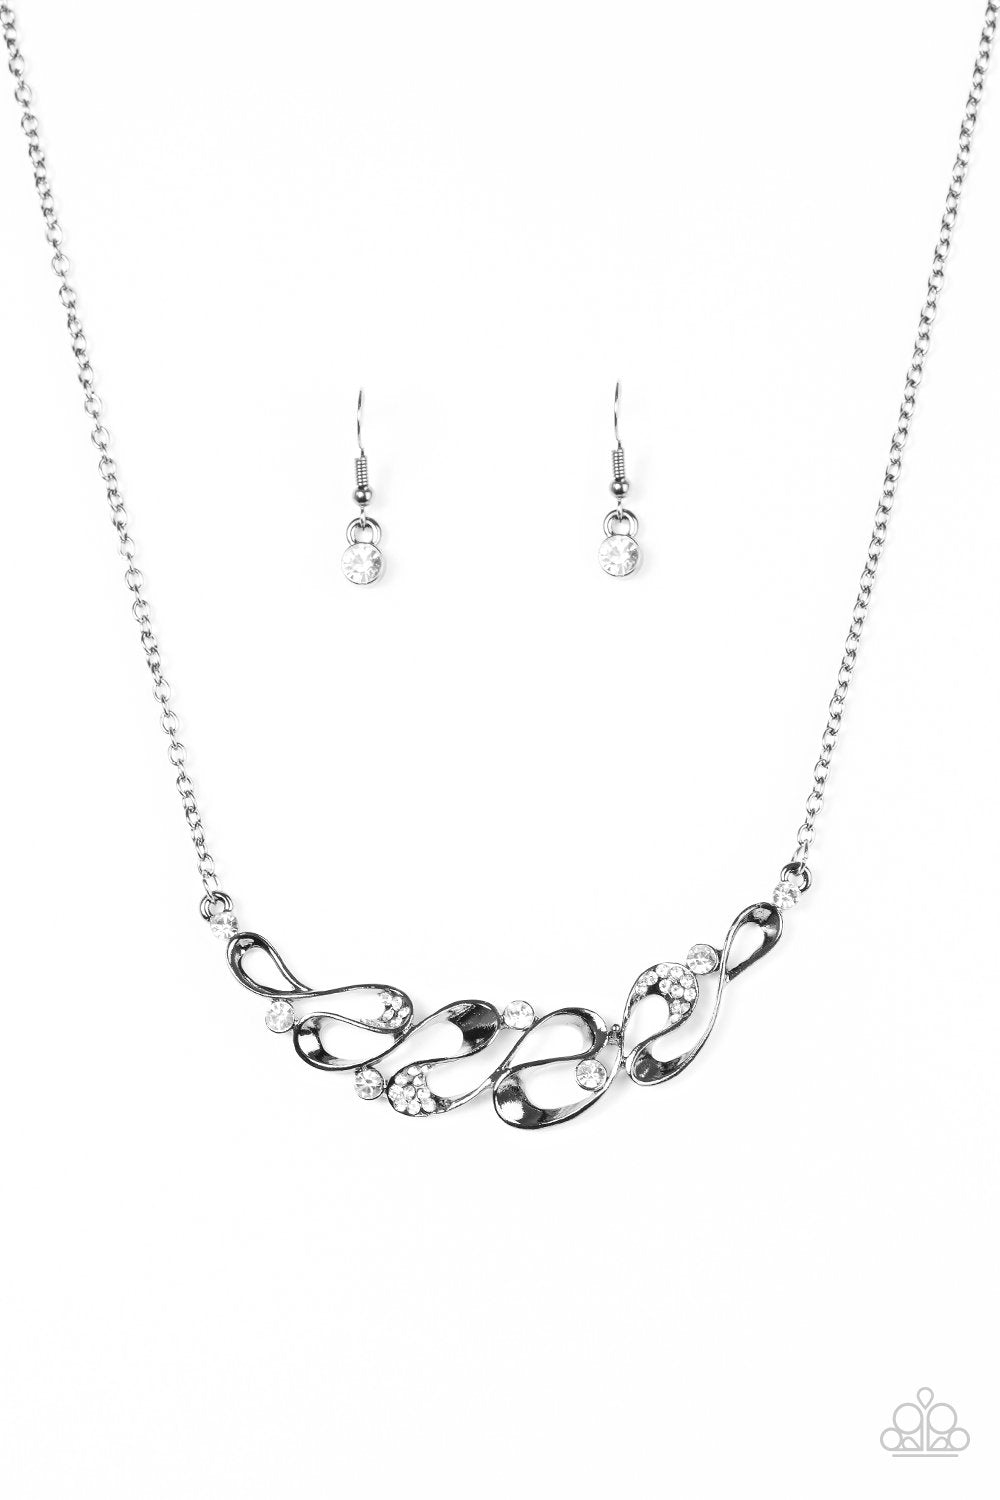 Easy Money Gunmetal Black Ribbon Necklace - Paparazzi Accessories-CarasShop.com - $5 Jewelry by Cara Jewels